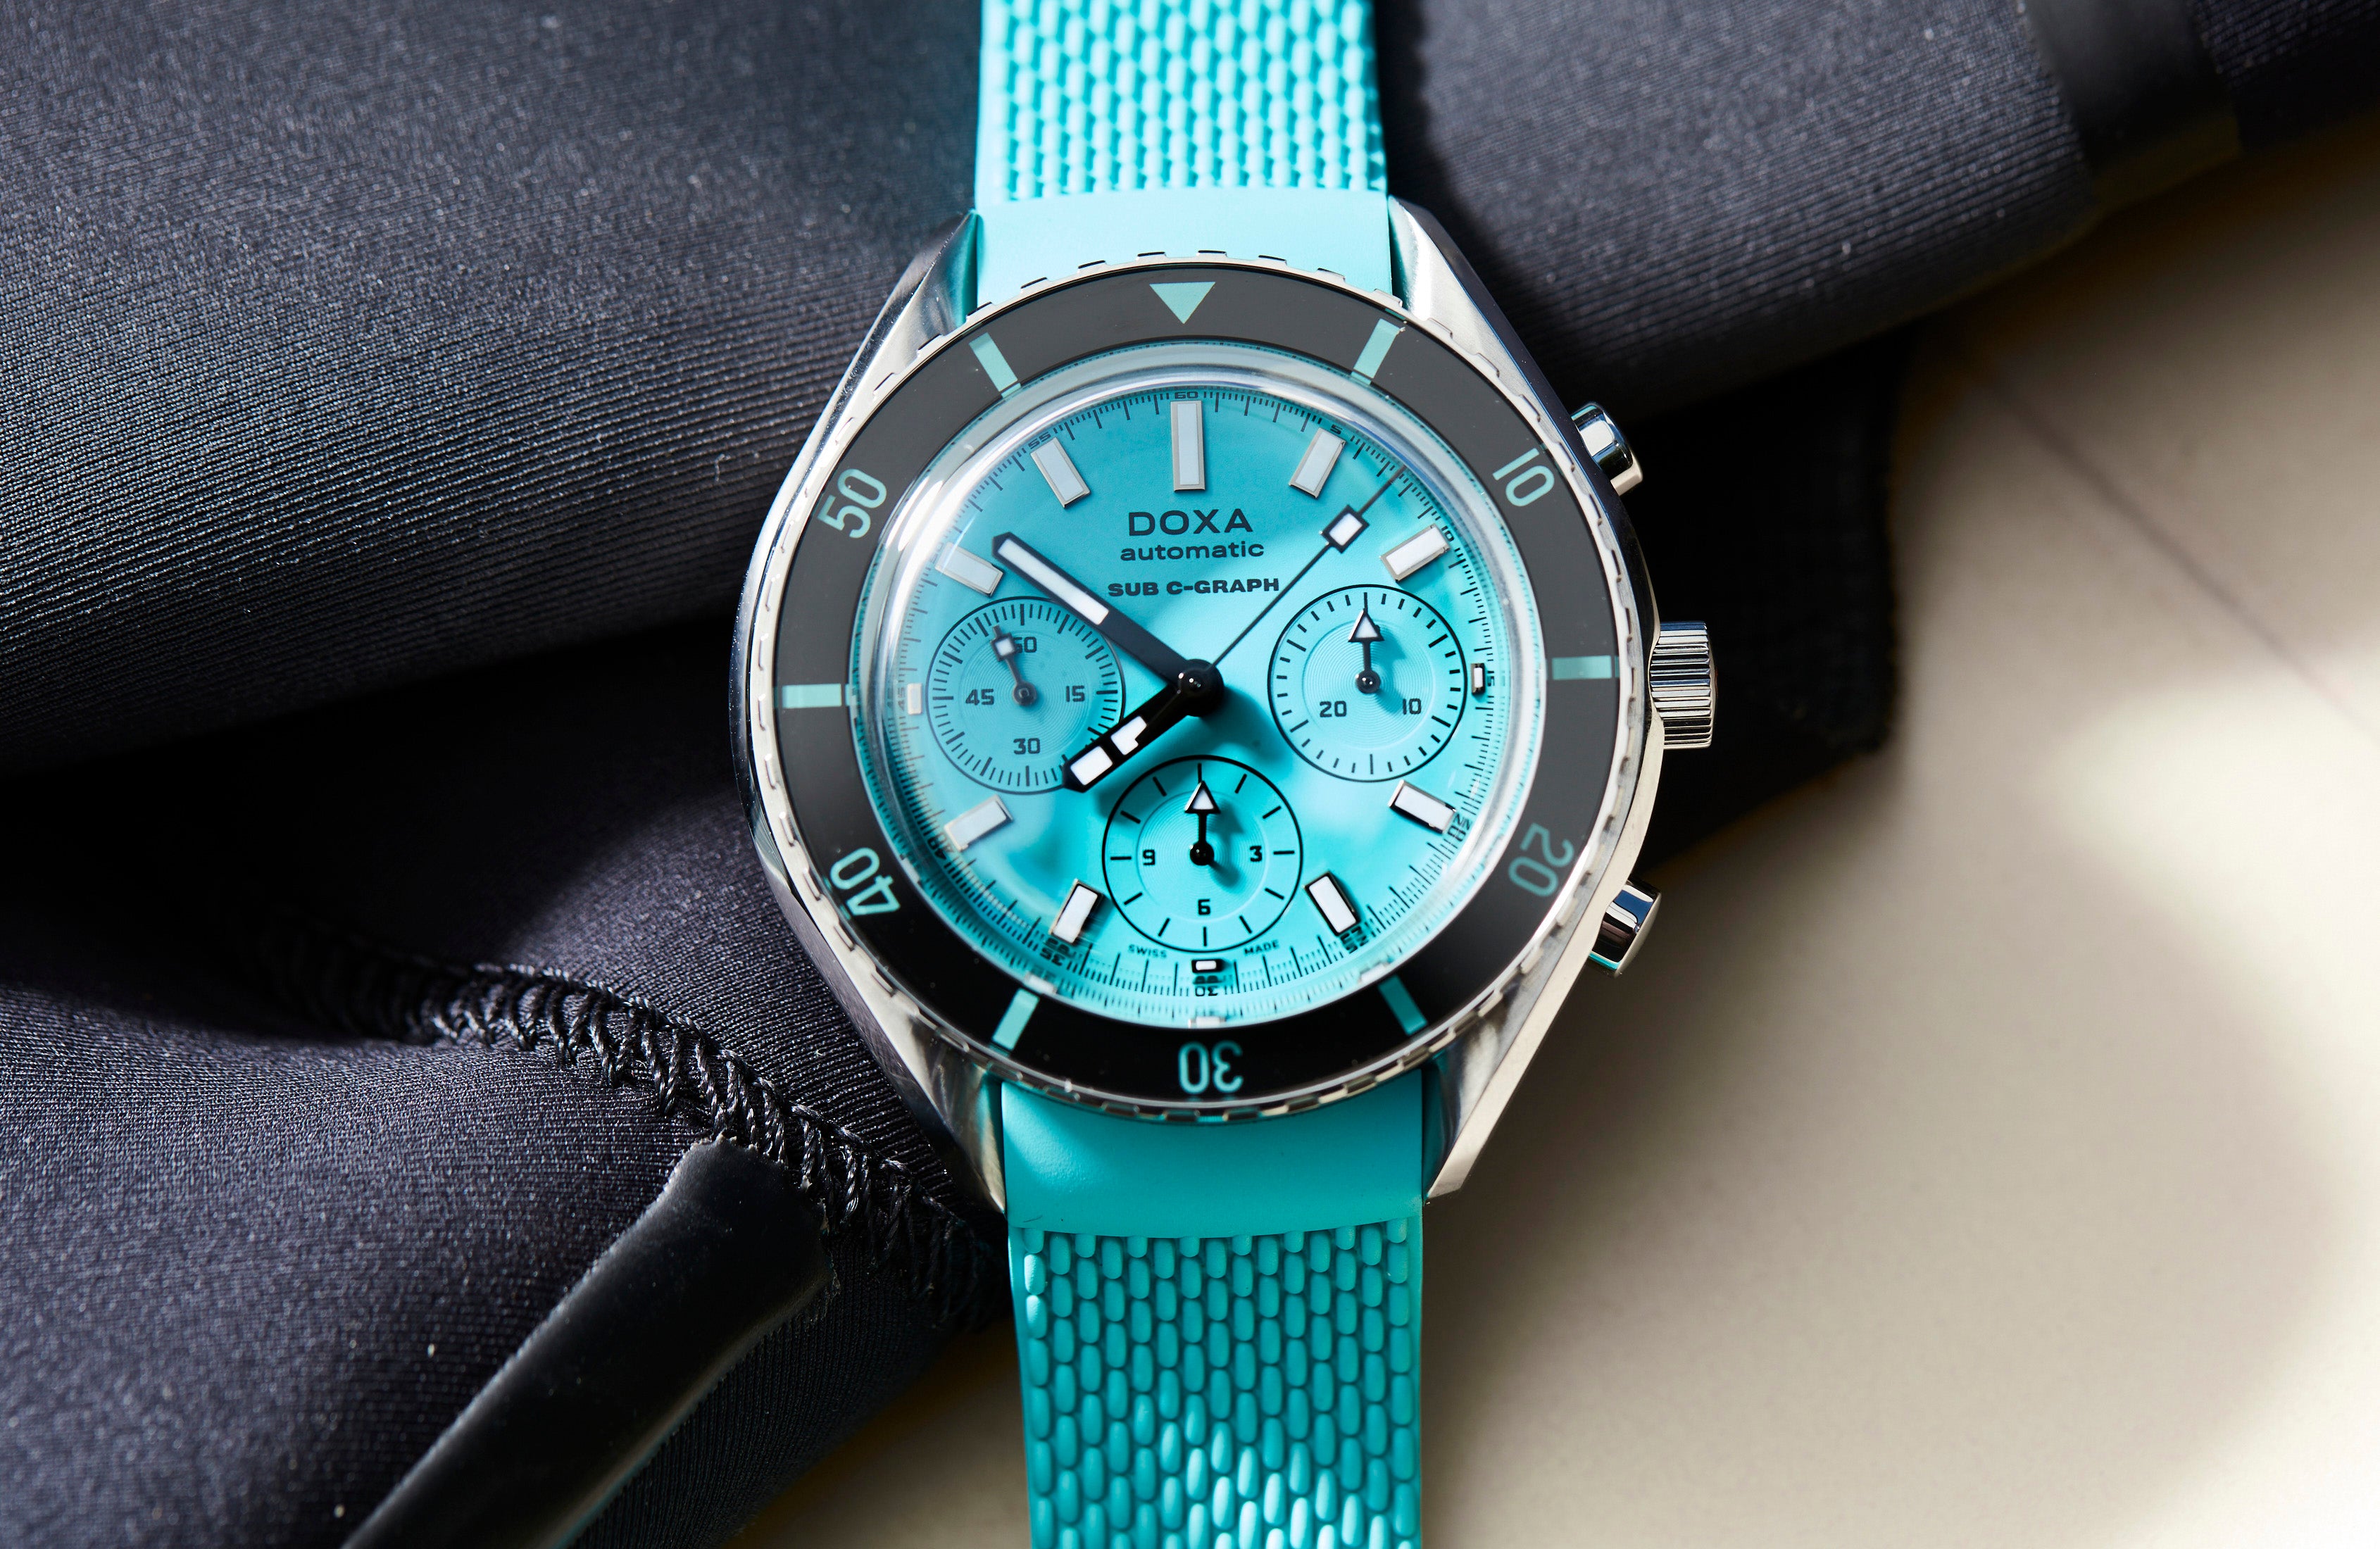 SUB 200 C-GRAPH – DOXA Watches US